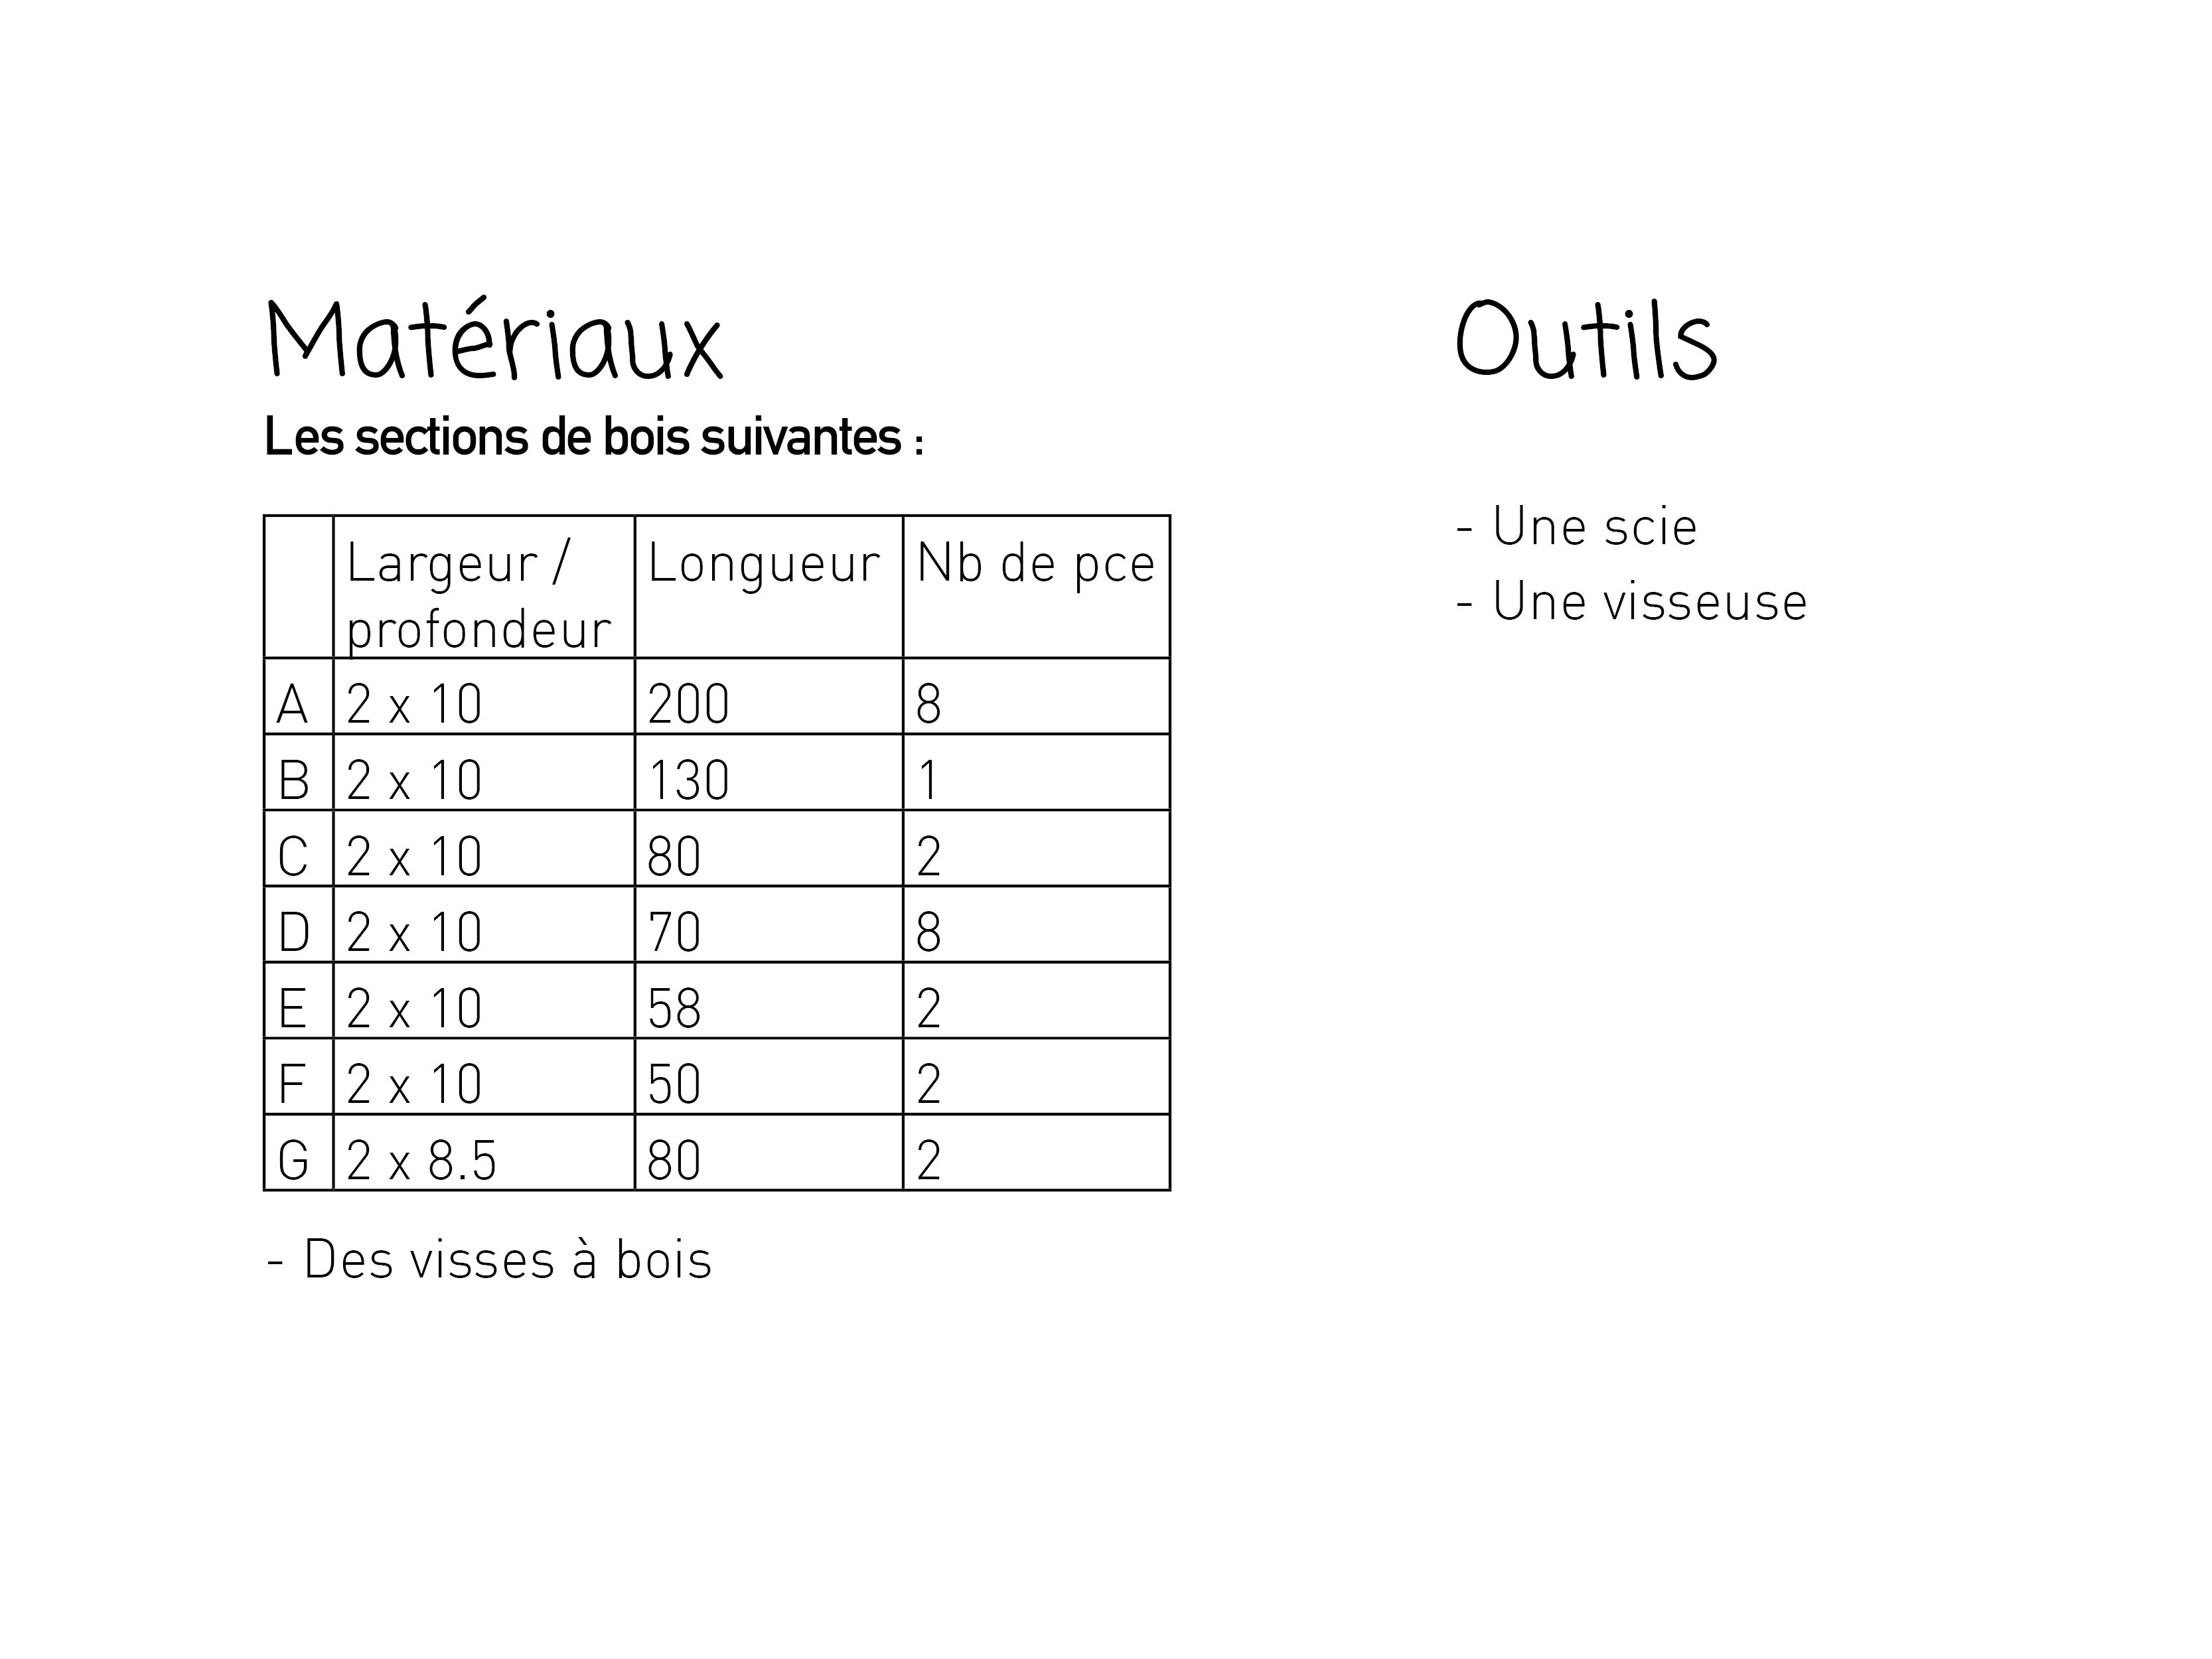 Table Enzo Mari - Poulpe x Les Saprophytes 2. Mat riaux outils.jpg